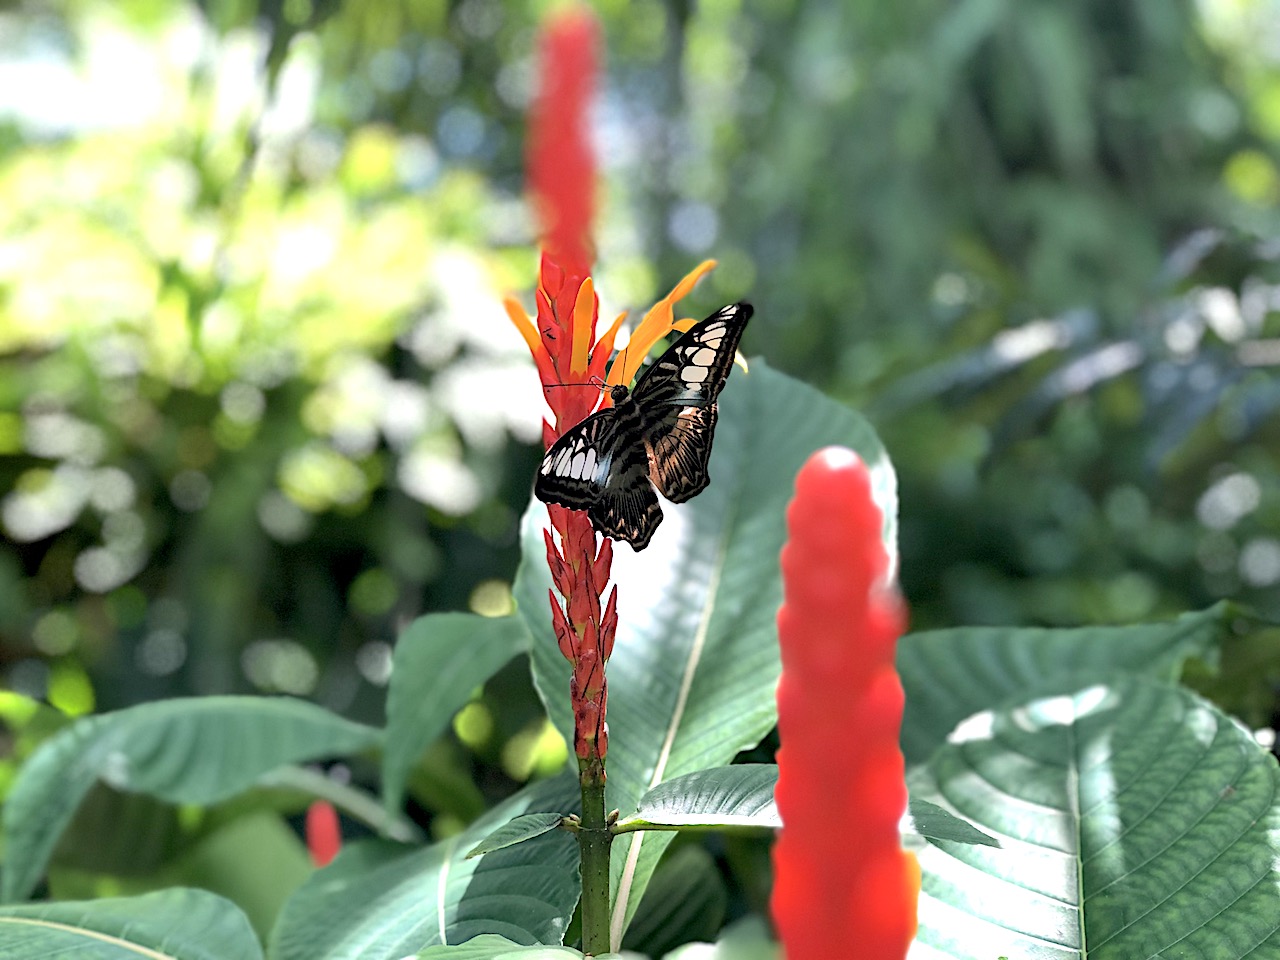 Butterfly Rainforest, Gainesville - 2-day itinerary for families in Gainesville, FL #gainesville #florida #tourofflorida #alachuacounty #gainesvilleFL #universityofflorida #UF #gogators #Gainesvillewithkids #gainesvilleitinerary